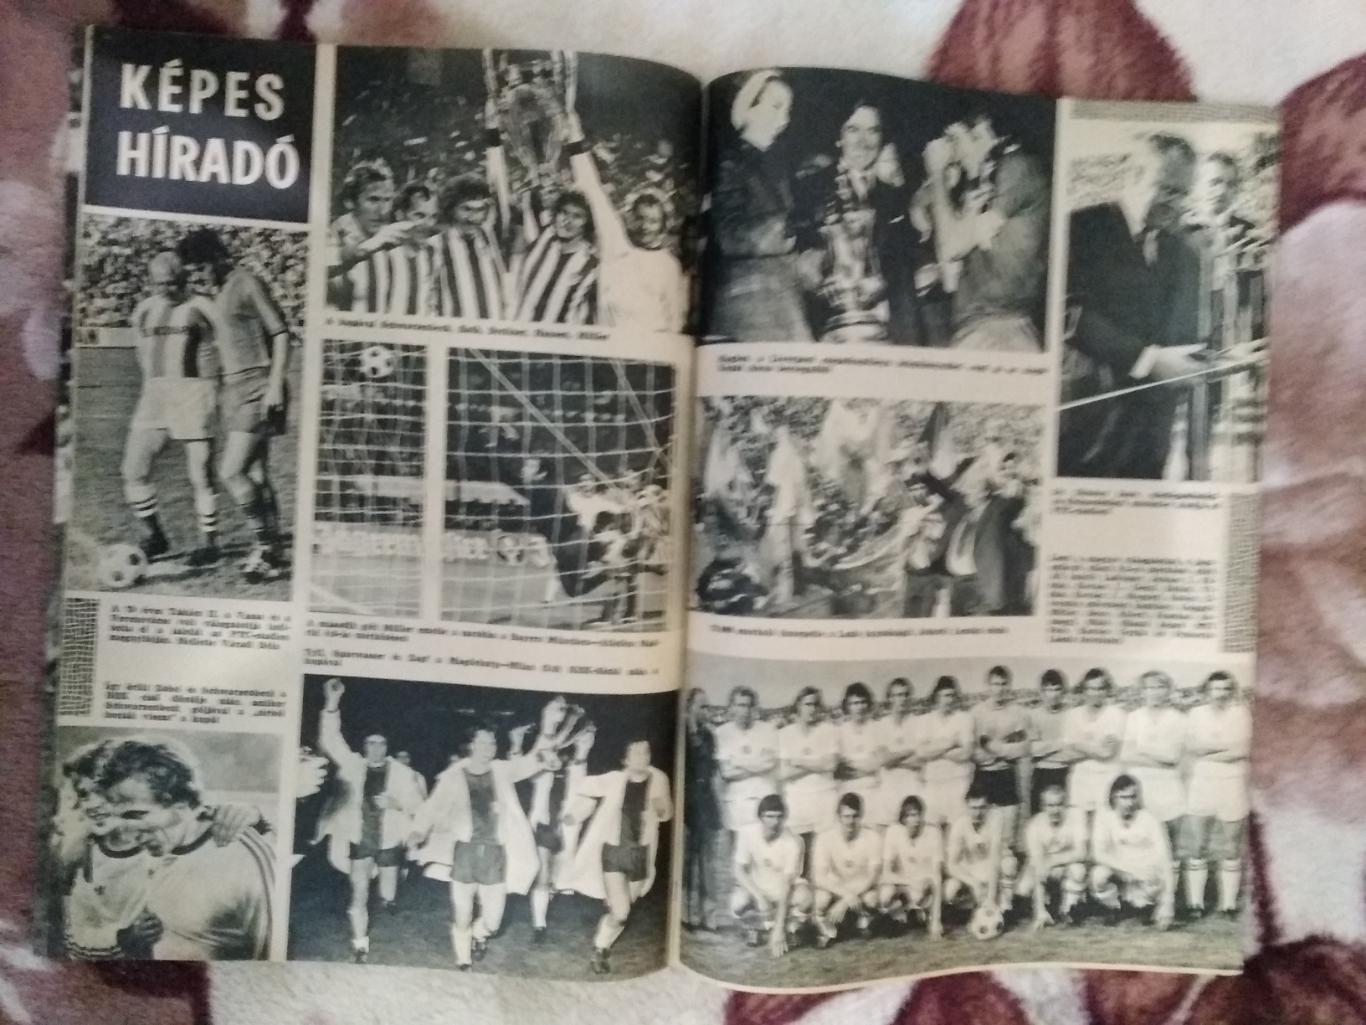 Журнал.Футбол.Лабдаругаш № 6 1974 г. (Венгрия). 1